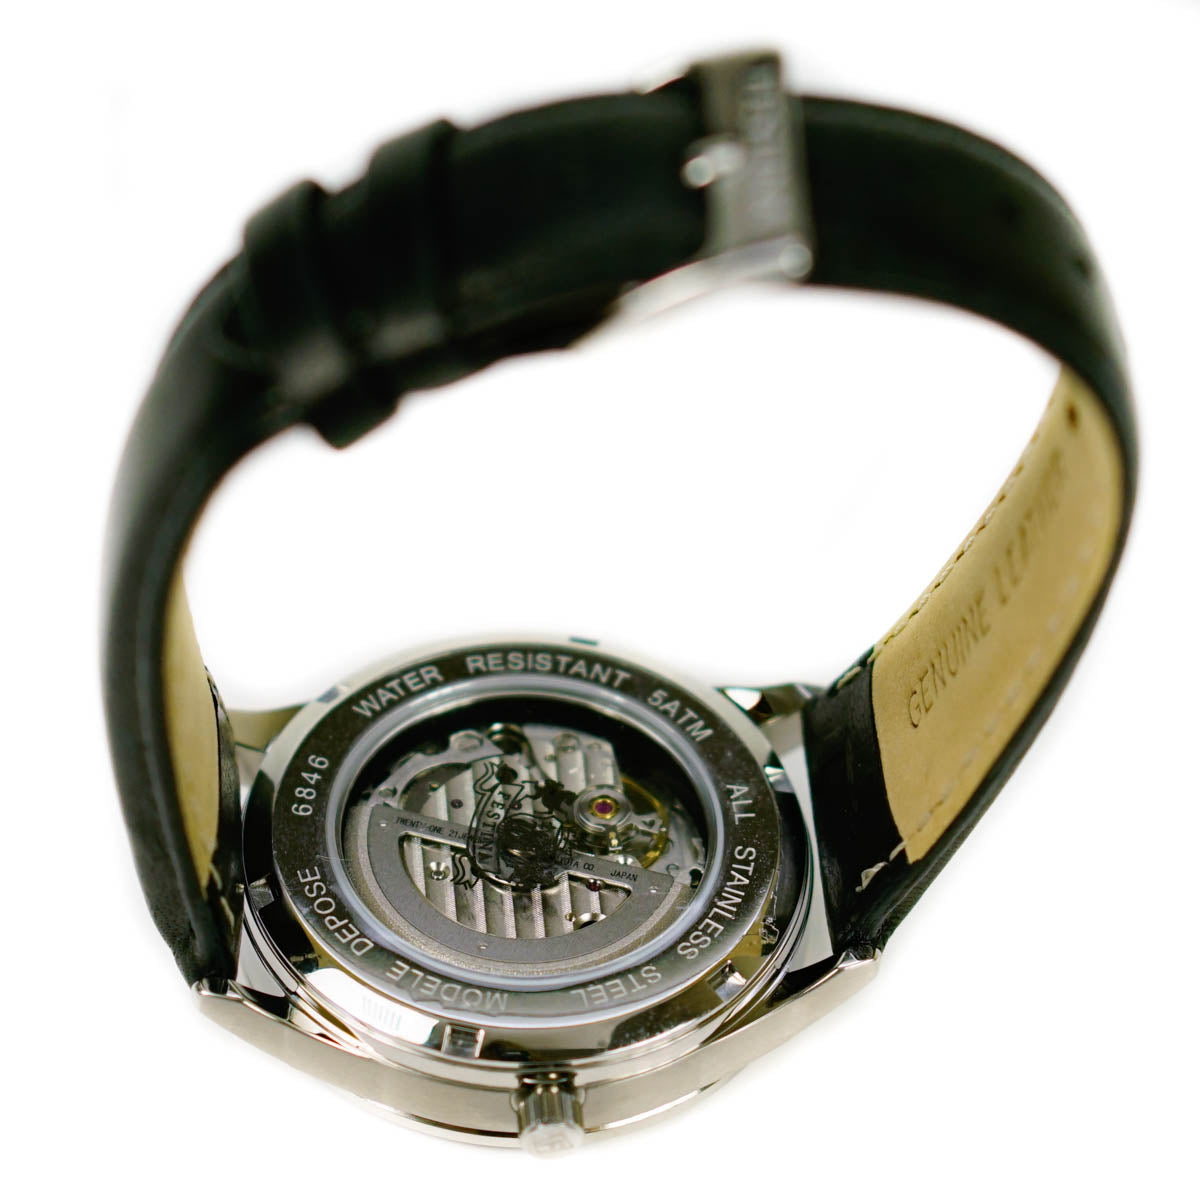 Festina Automatic Black Leather Watch F6846-4